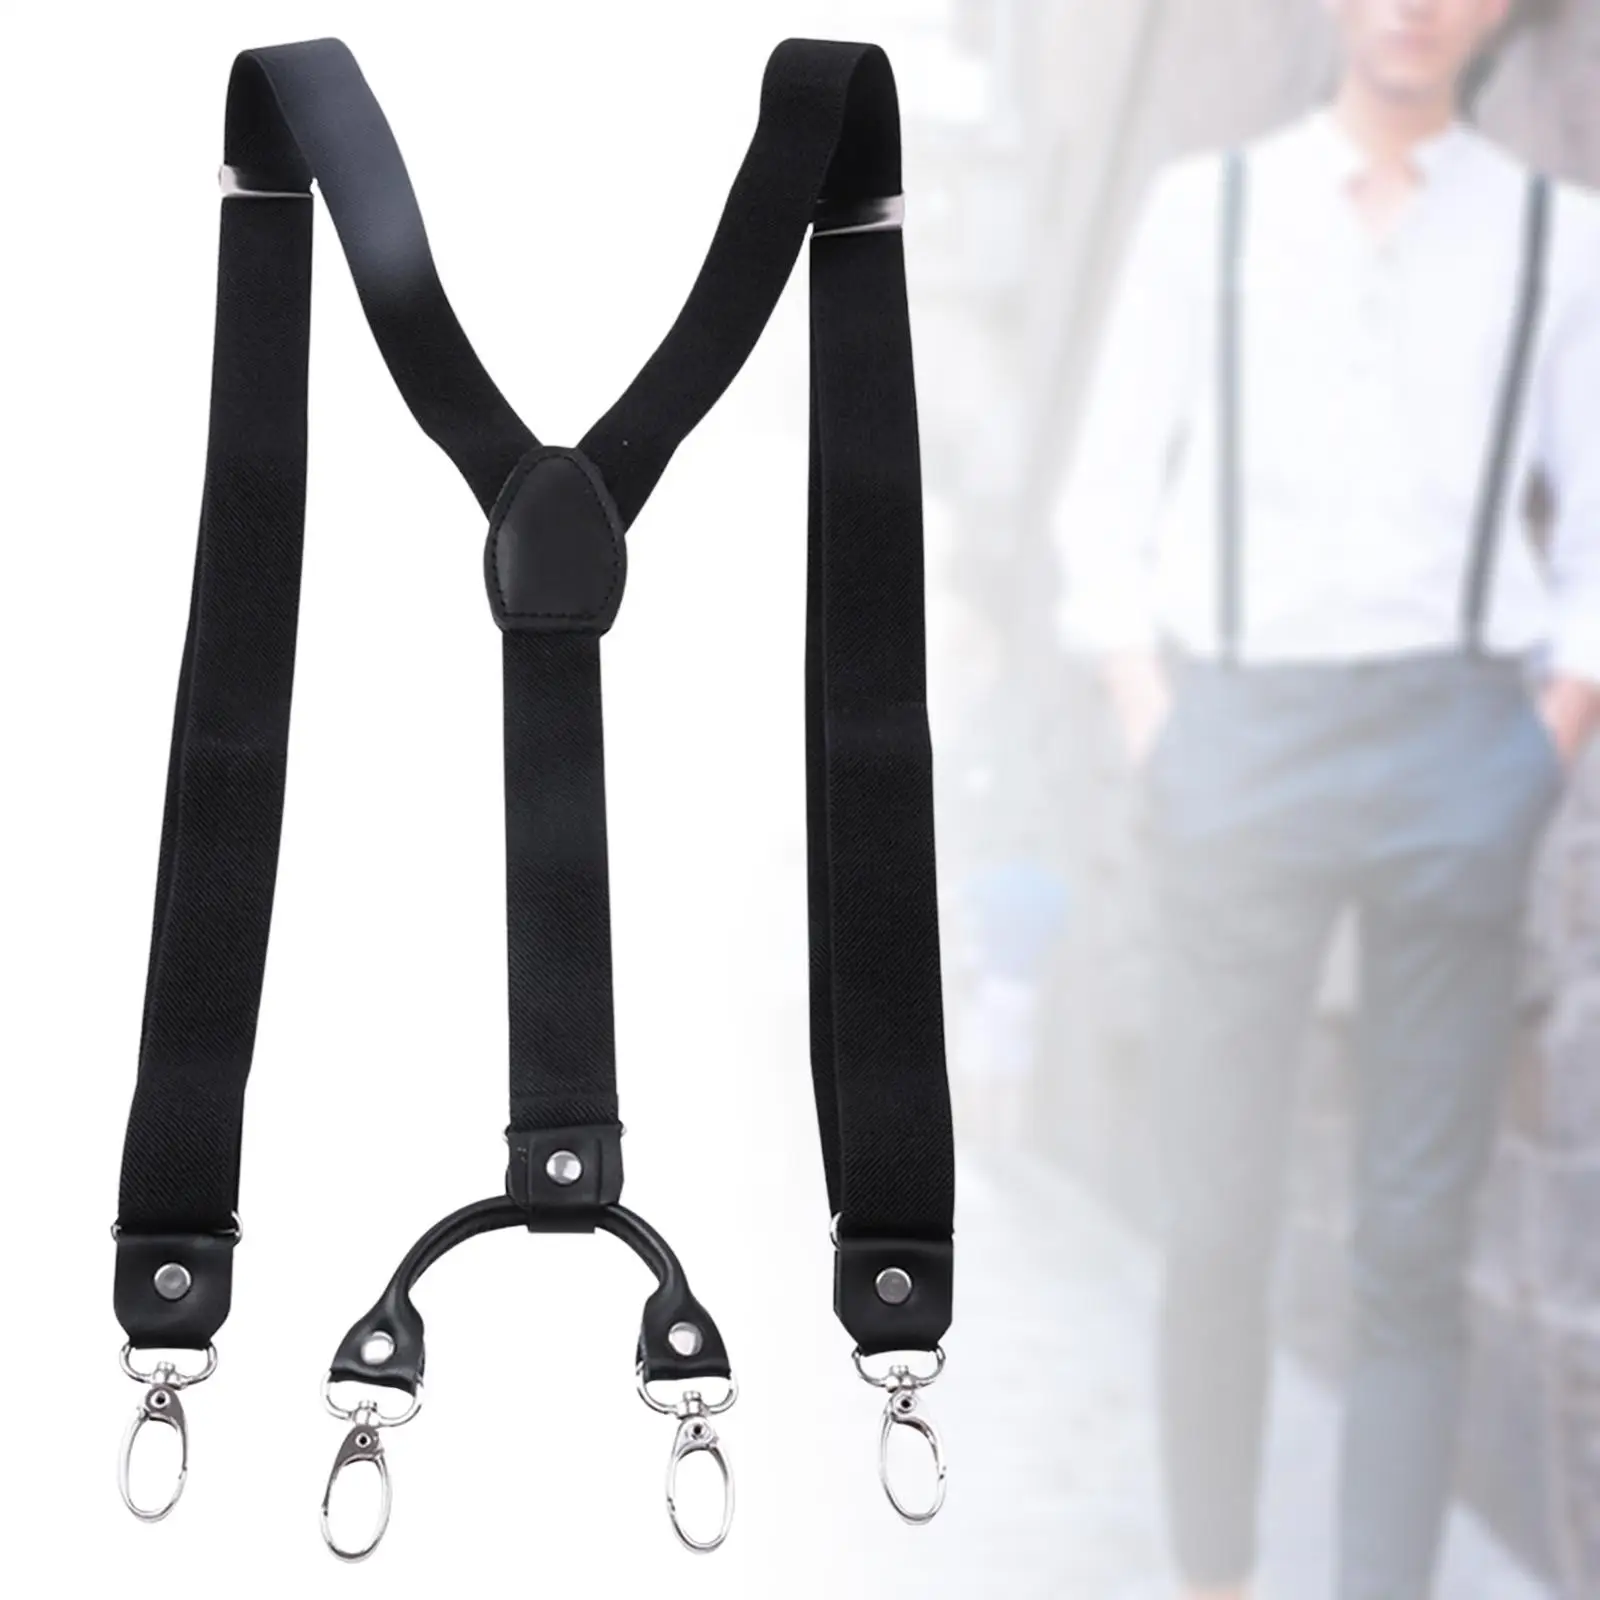 Suspenders for Men with 4 Swivel Hooks Y Back Construction Heavy Duty Belt Loops Elastic Adjustable Pants Braces for Work Casual